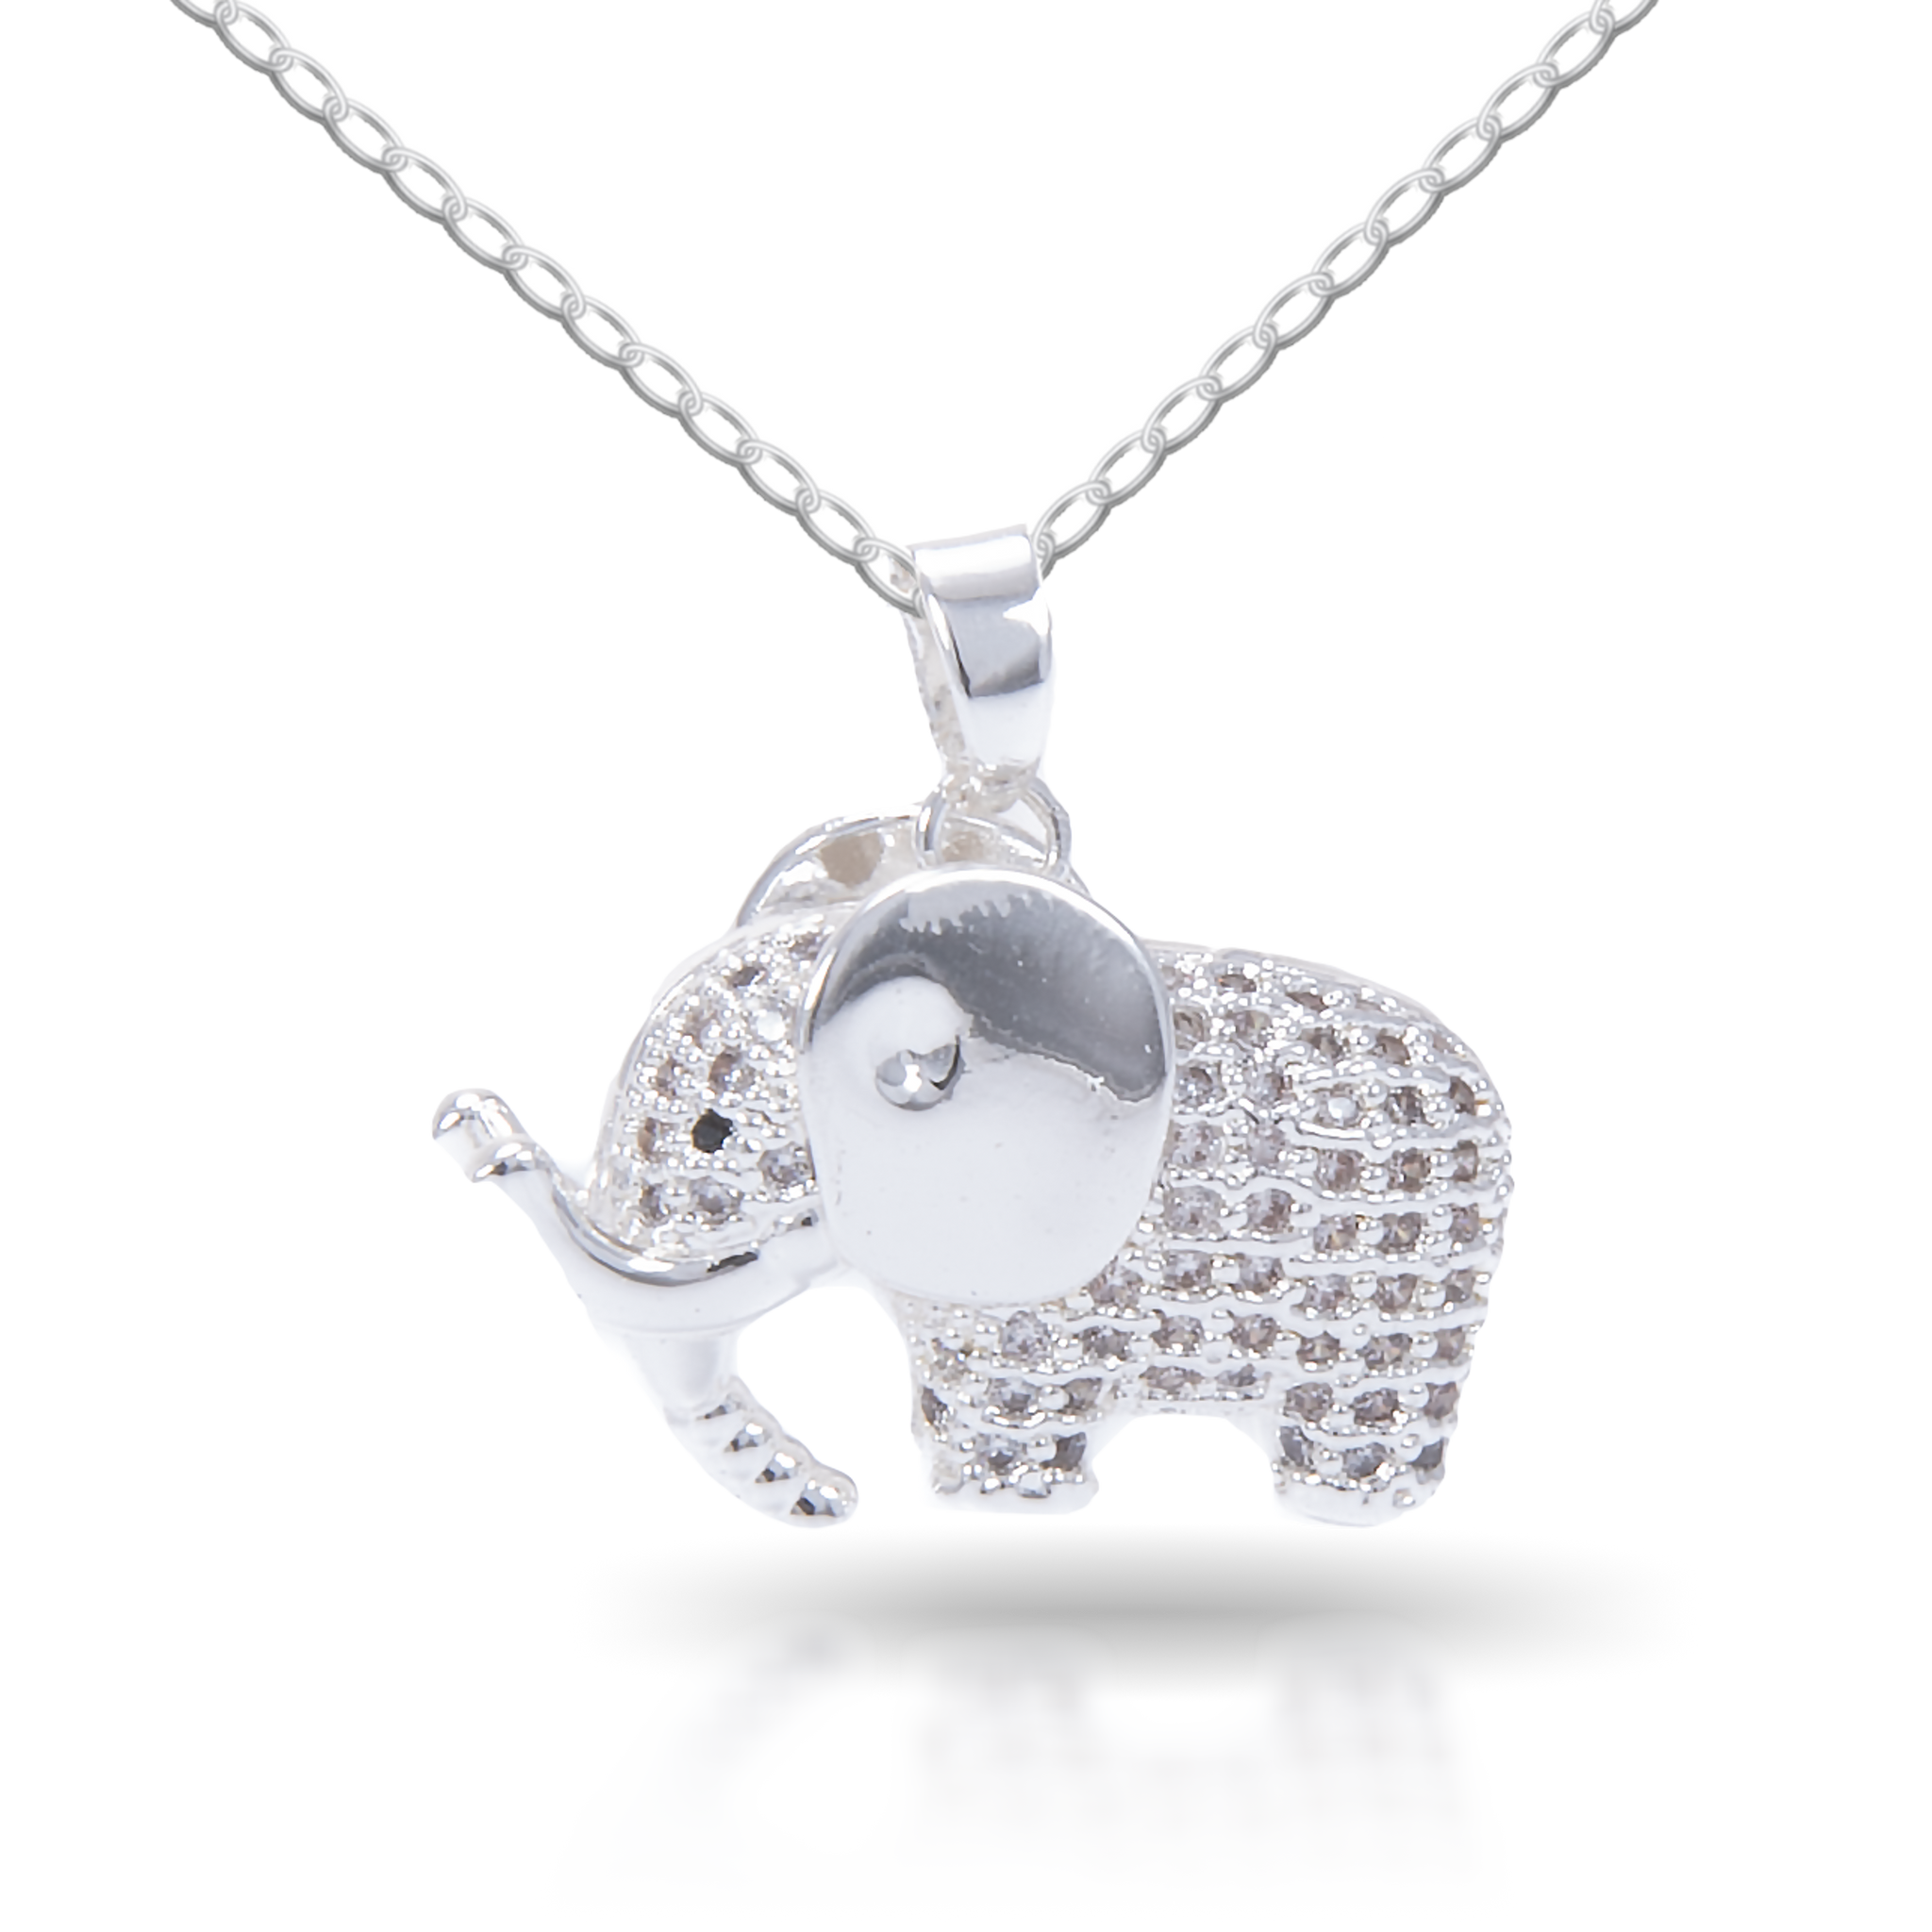 Ice Blu Elephant Necklace - Silver